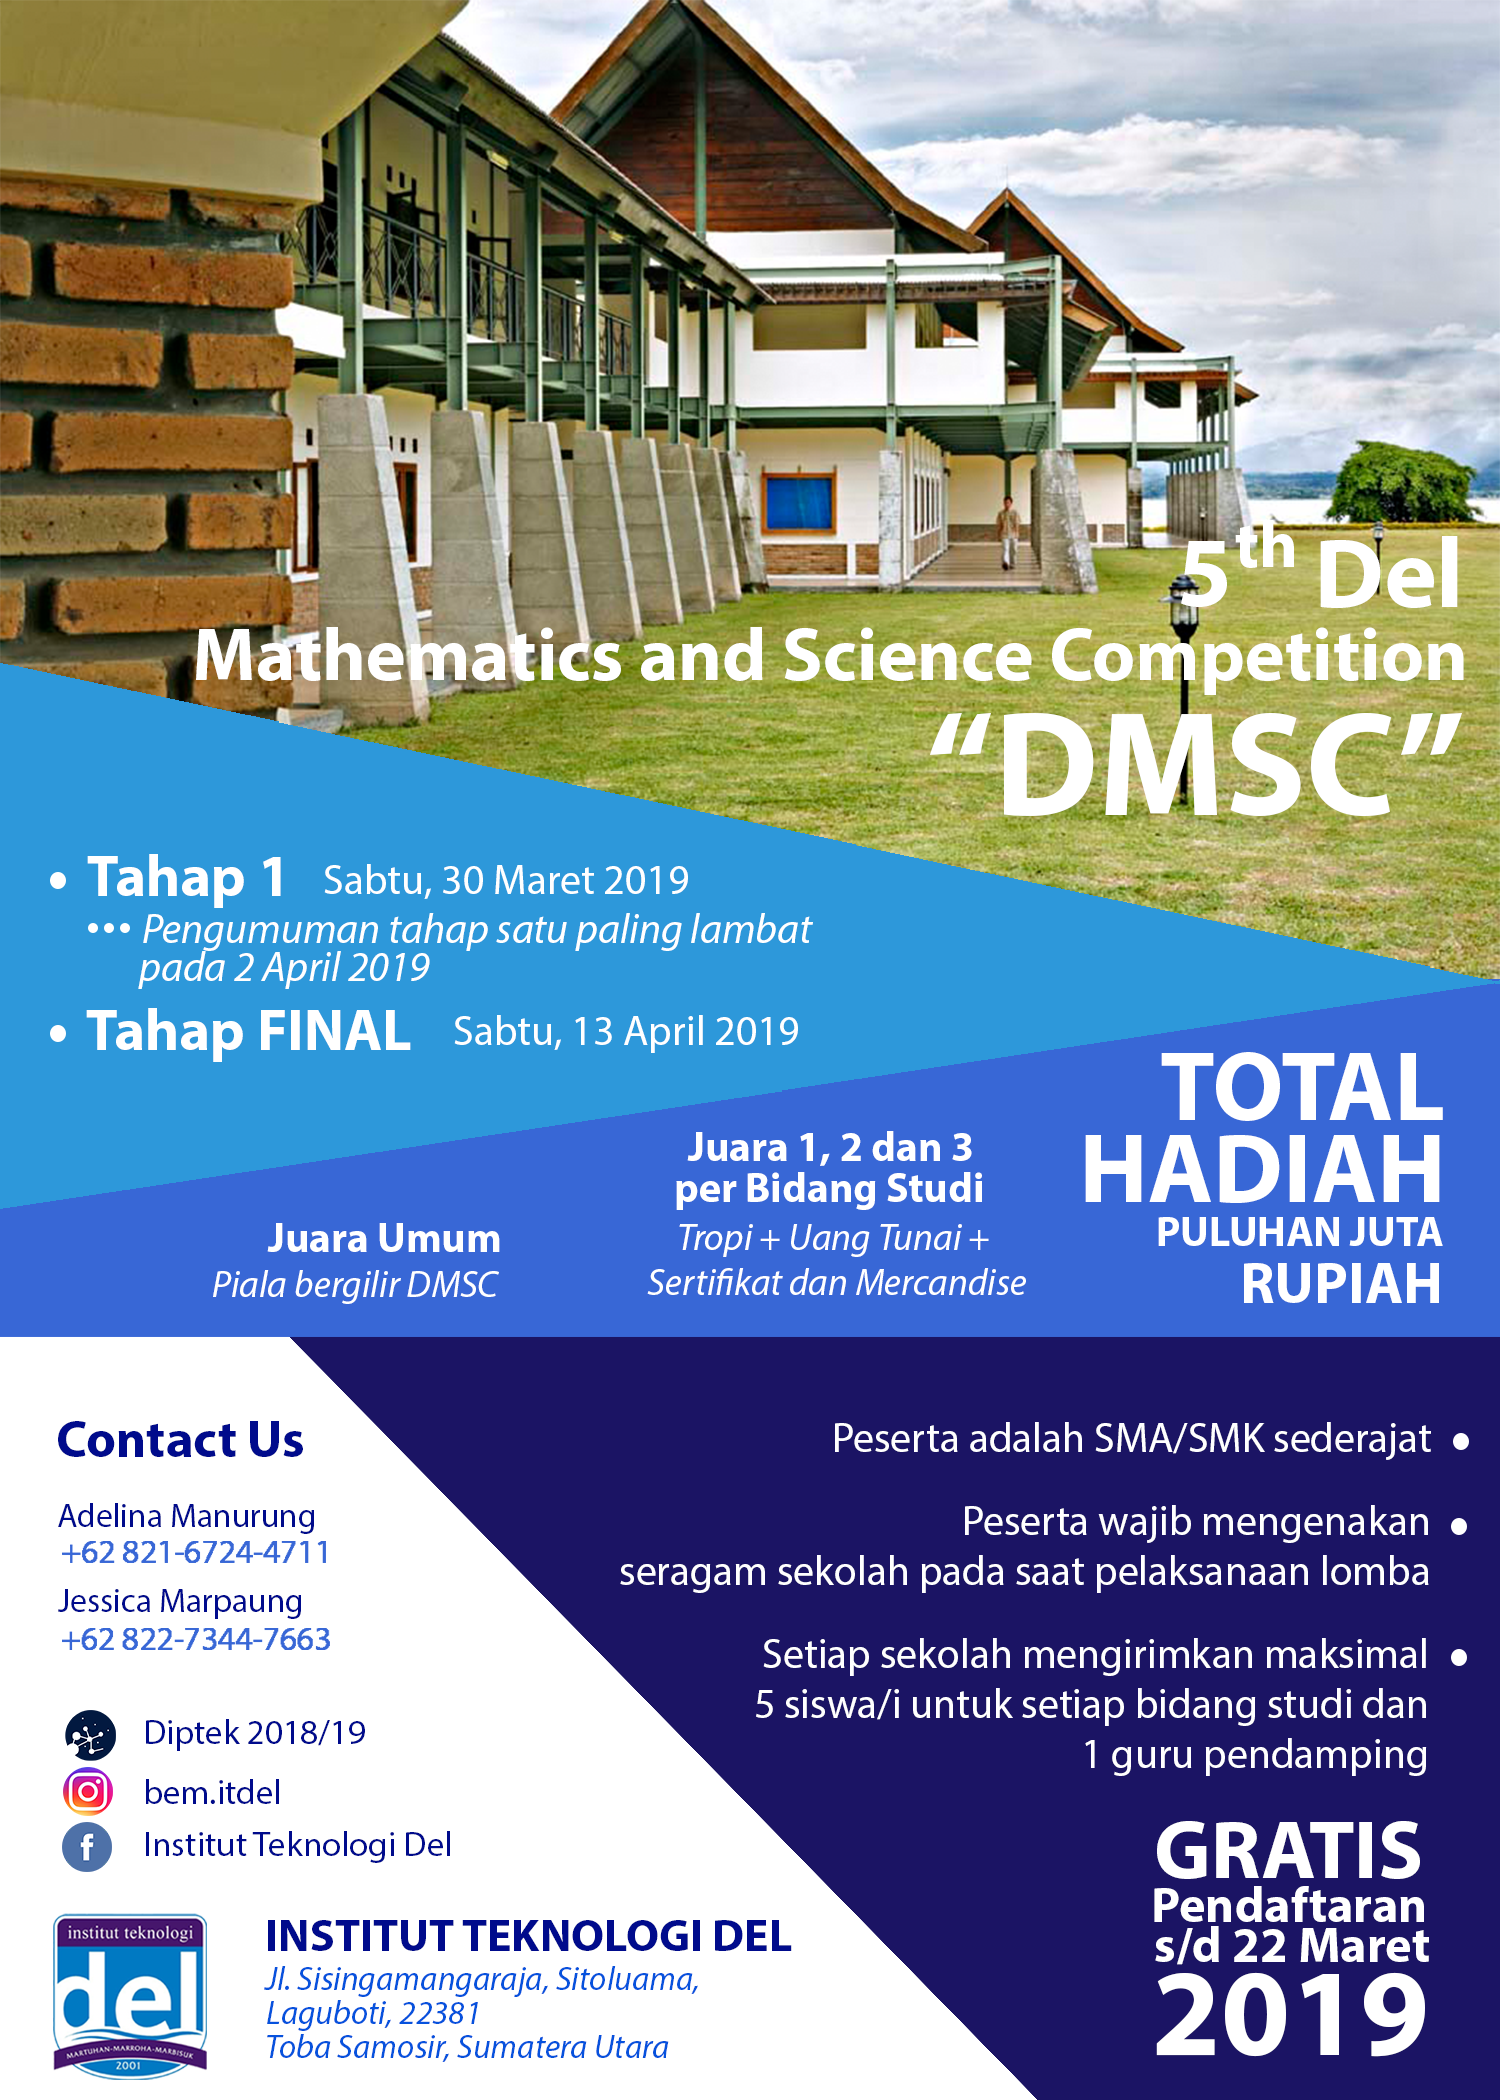 DMSC (Del Mathematics and Science Competition) 2019 hadir lagi…!!!